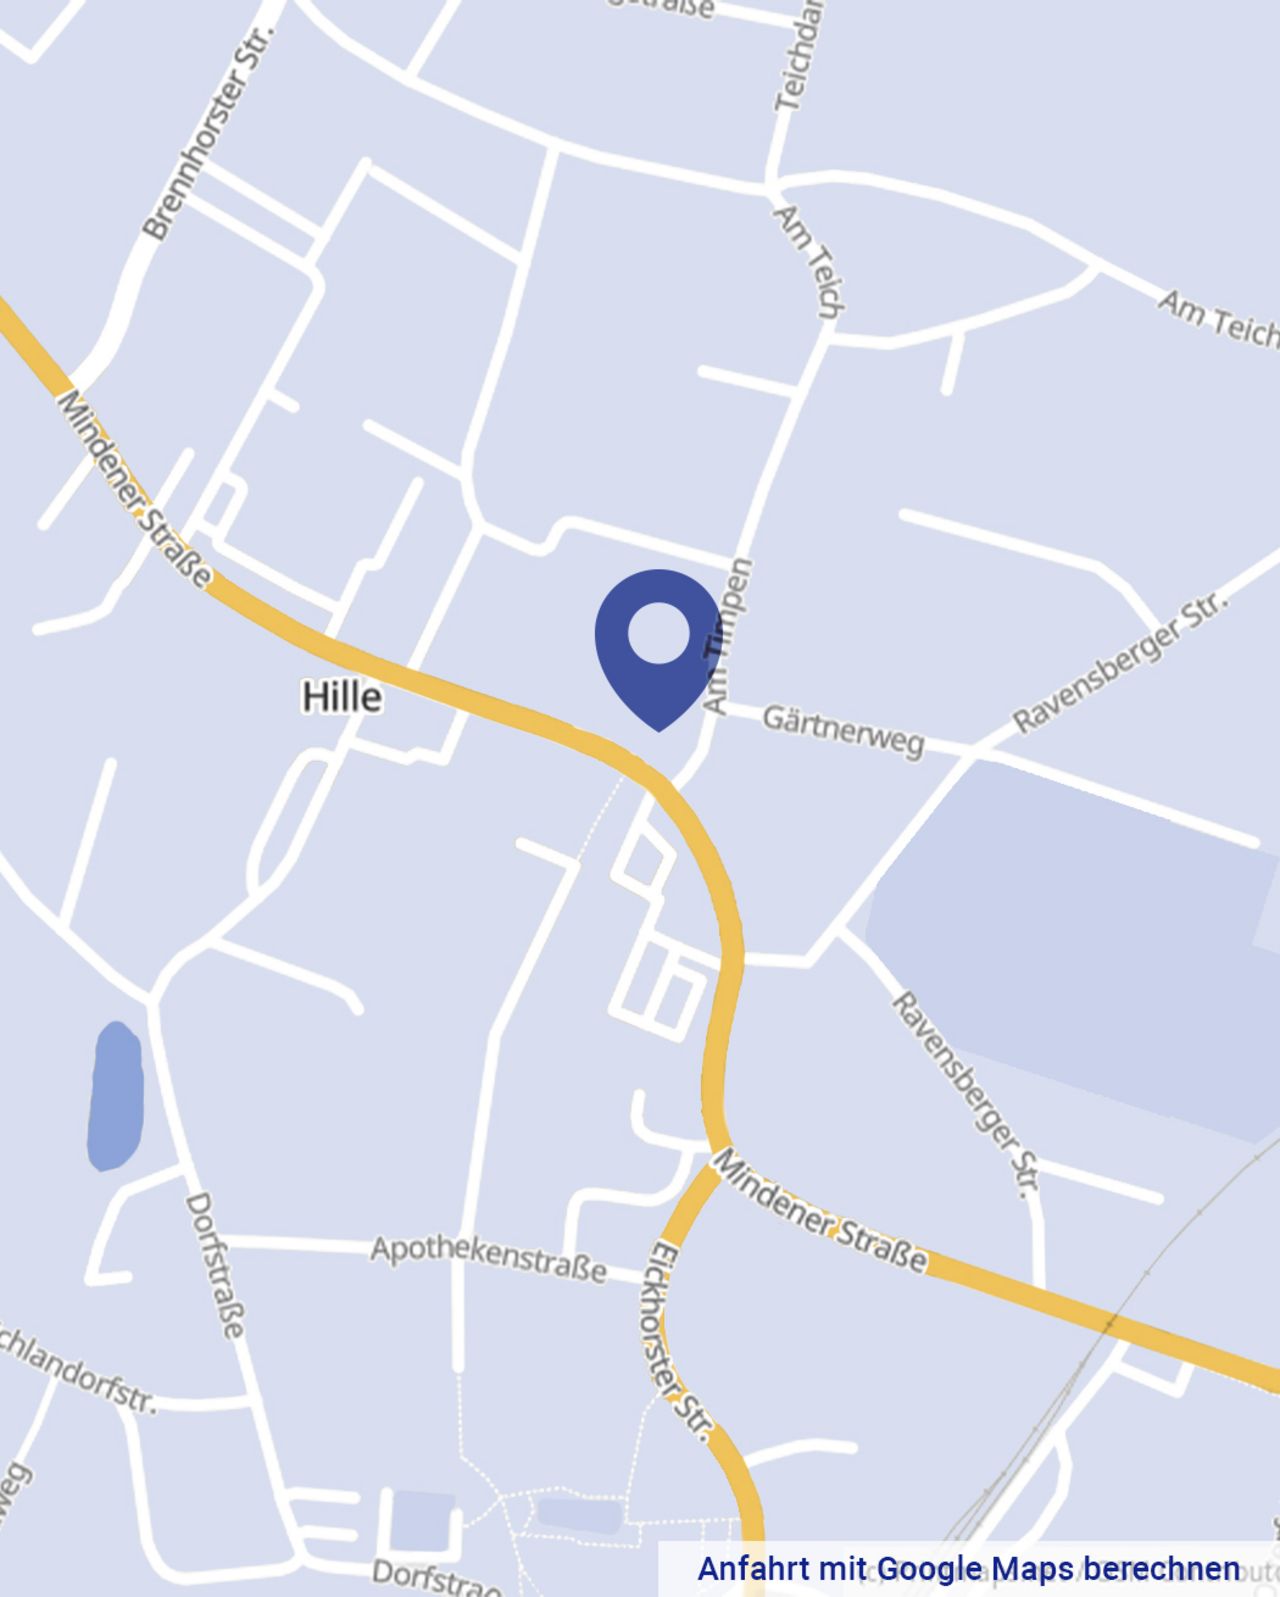 Capitalia - Anfahrt mit Google Maps berechnen